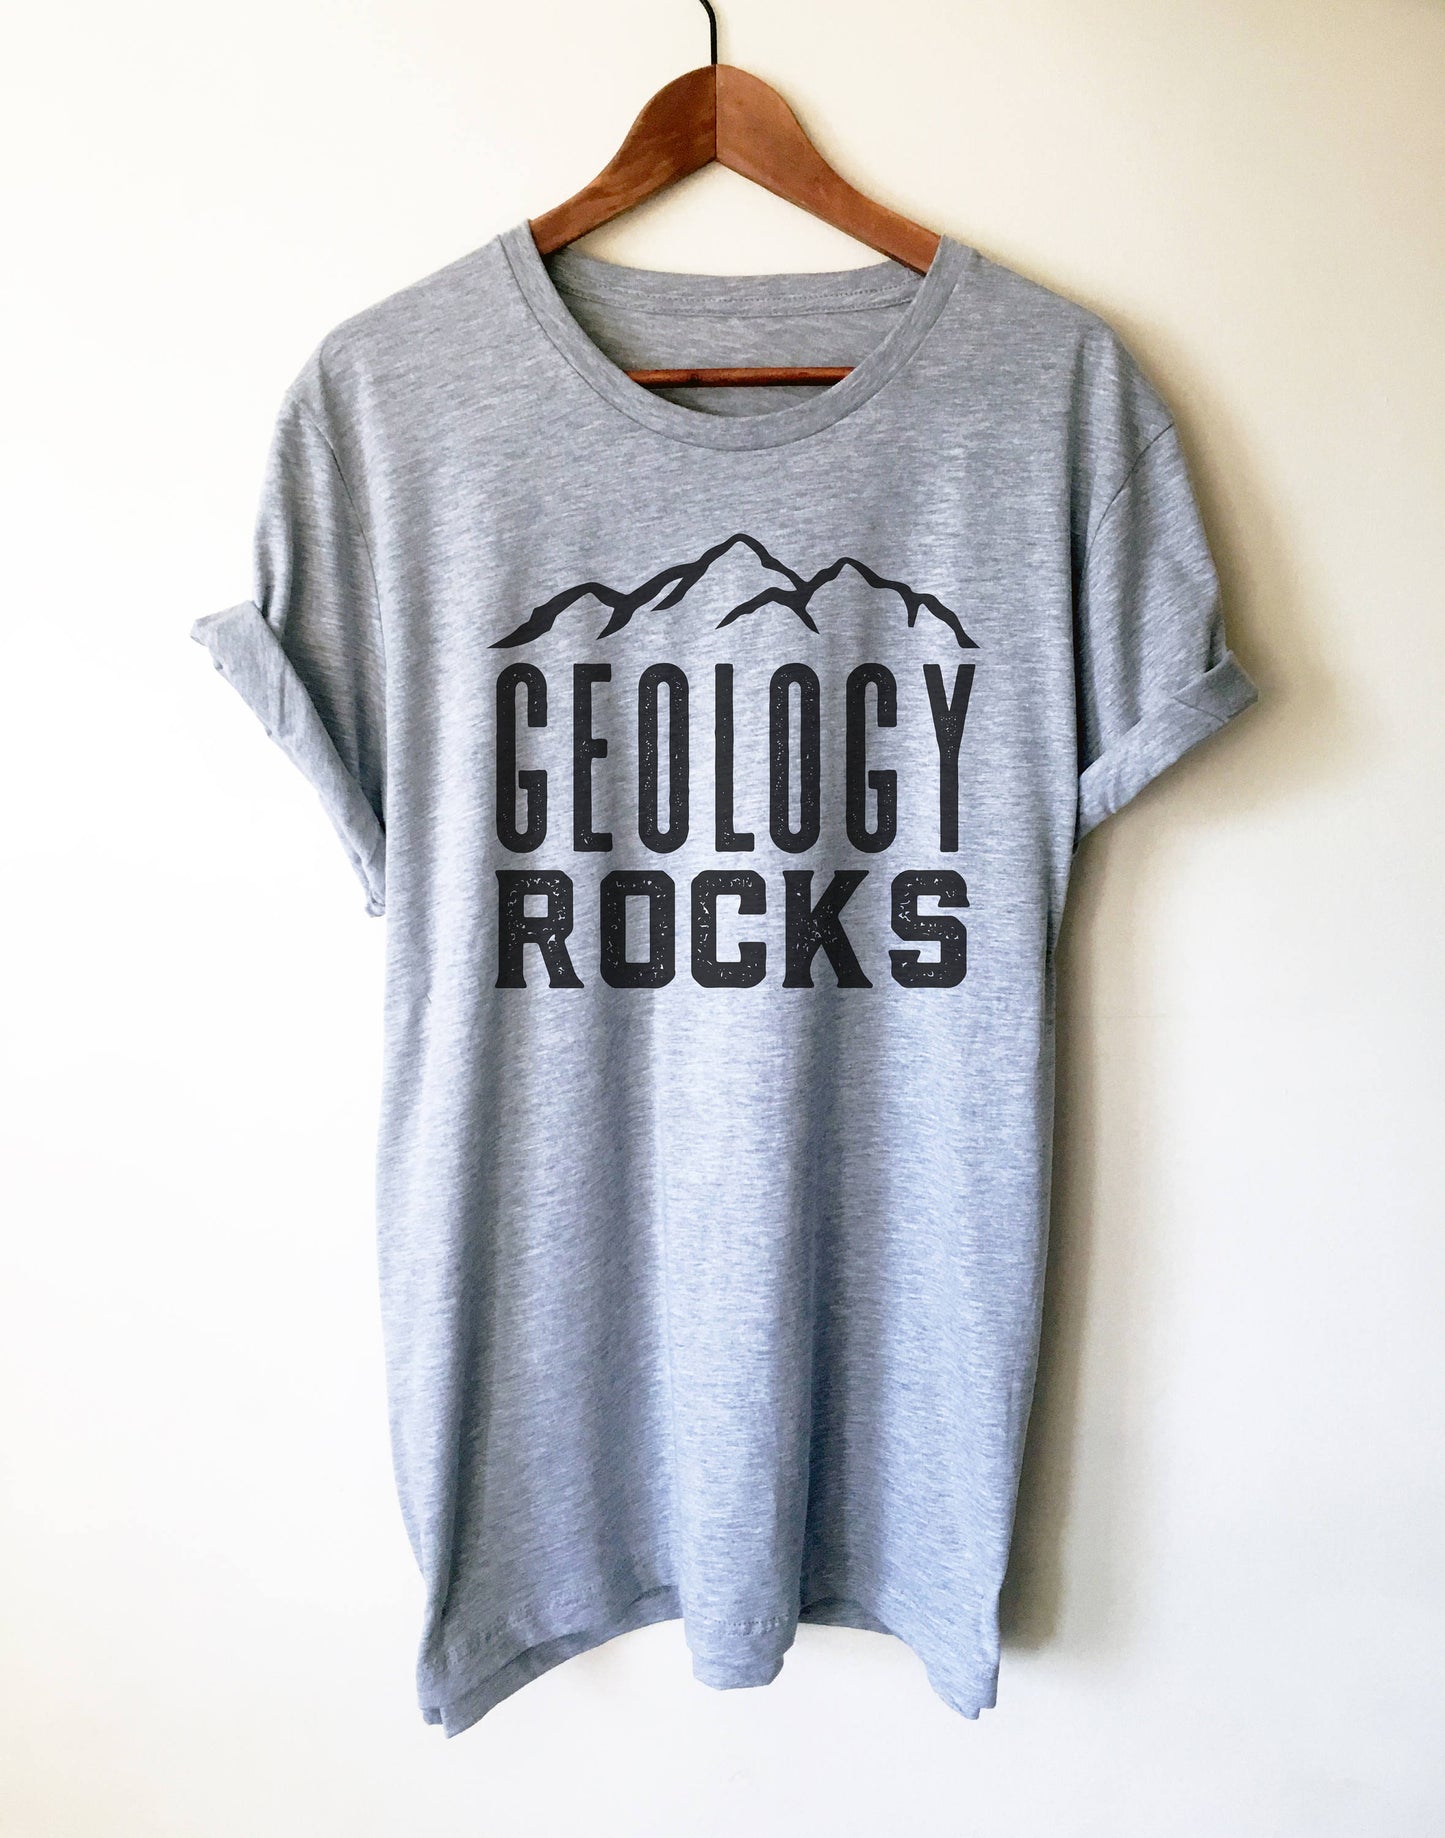 Geology Rocks Unisex T-Shirt - Geology shirt, Geologist, Geologist gift, Geology professor, Geology Student, Geology Puns